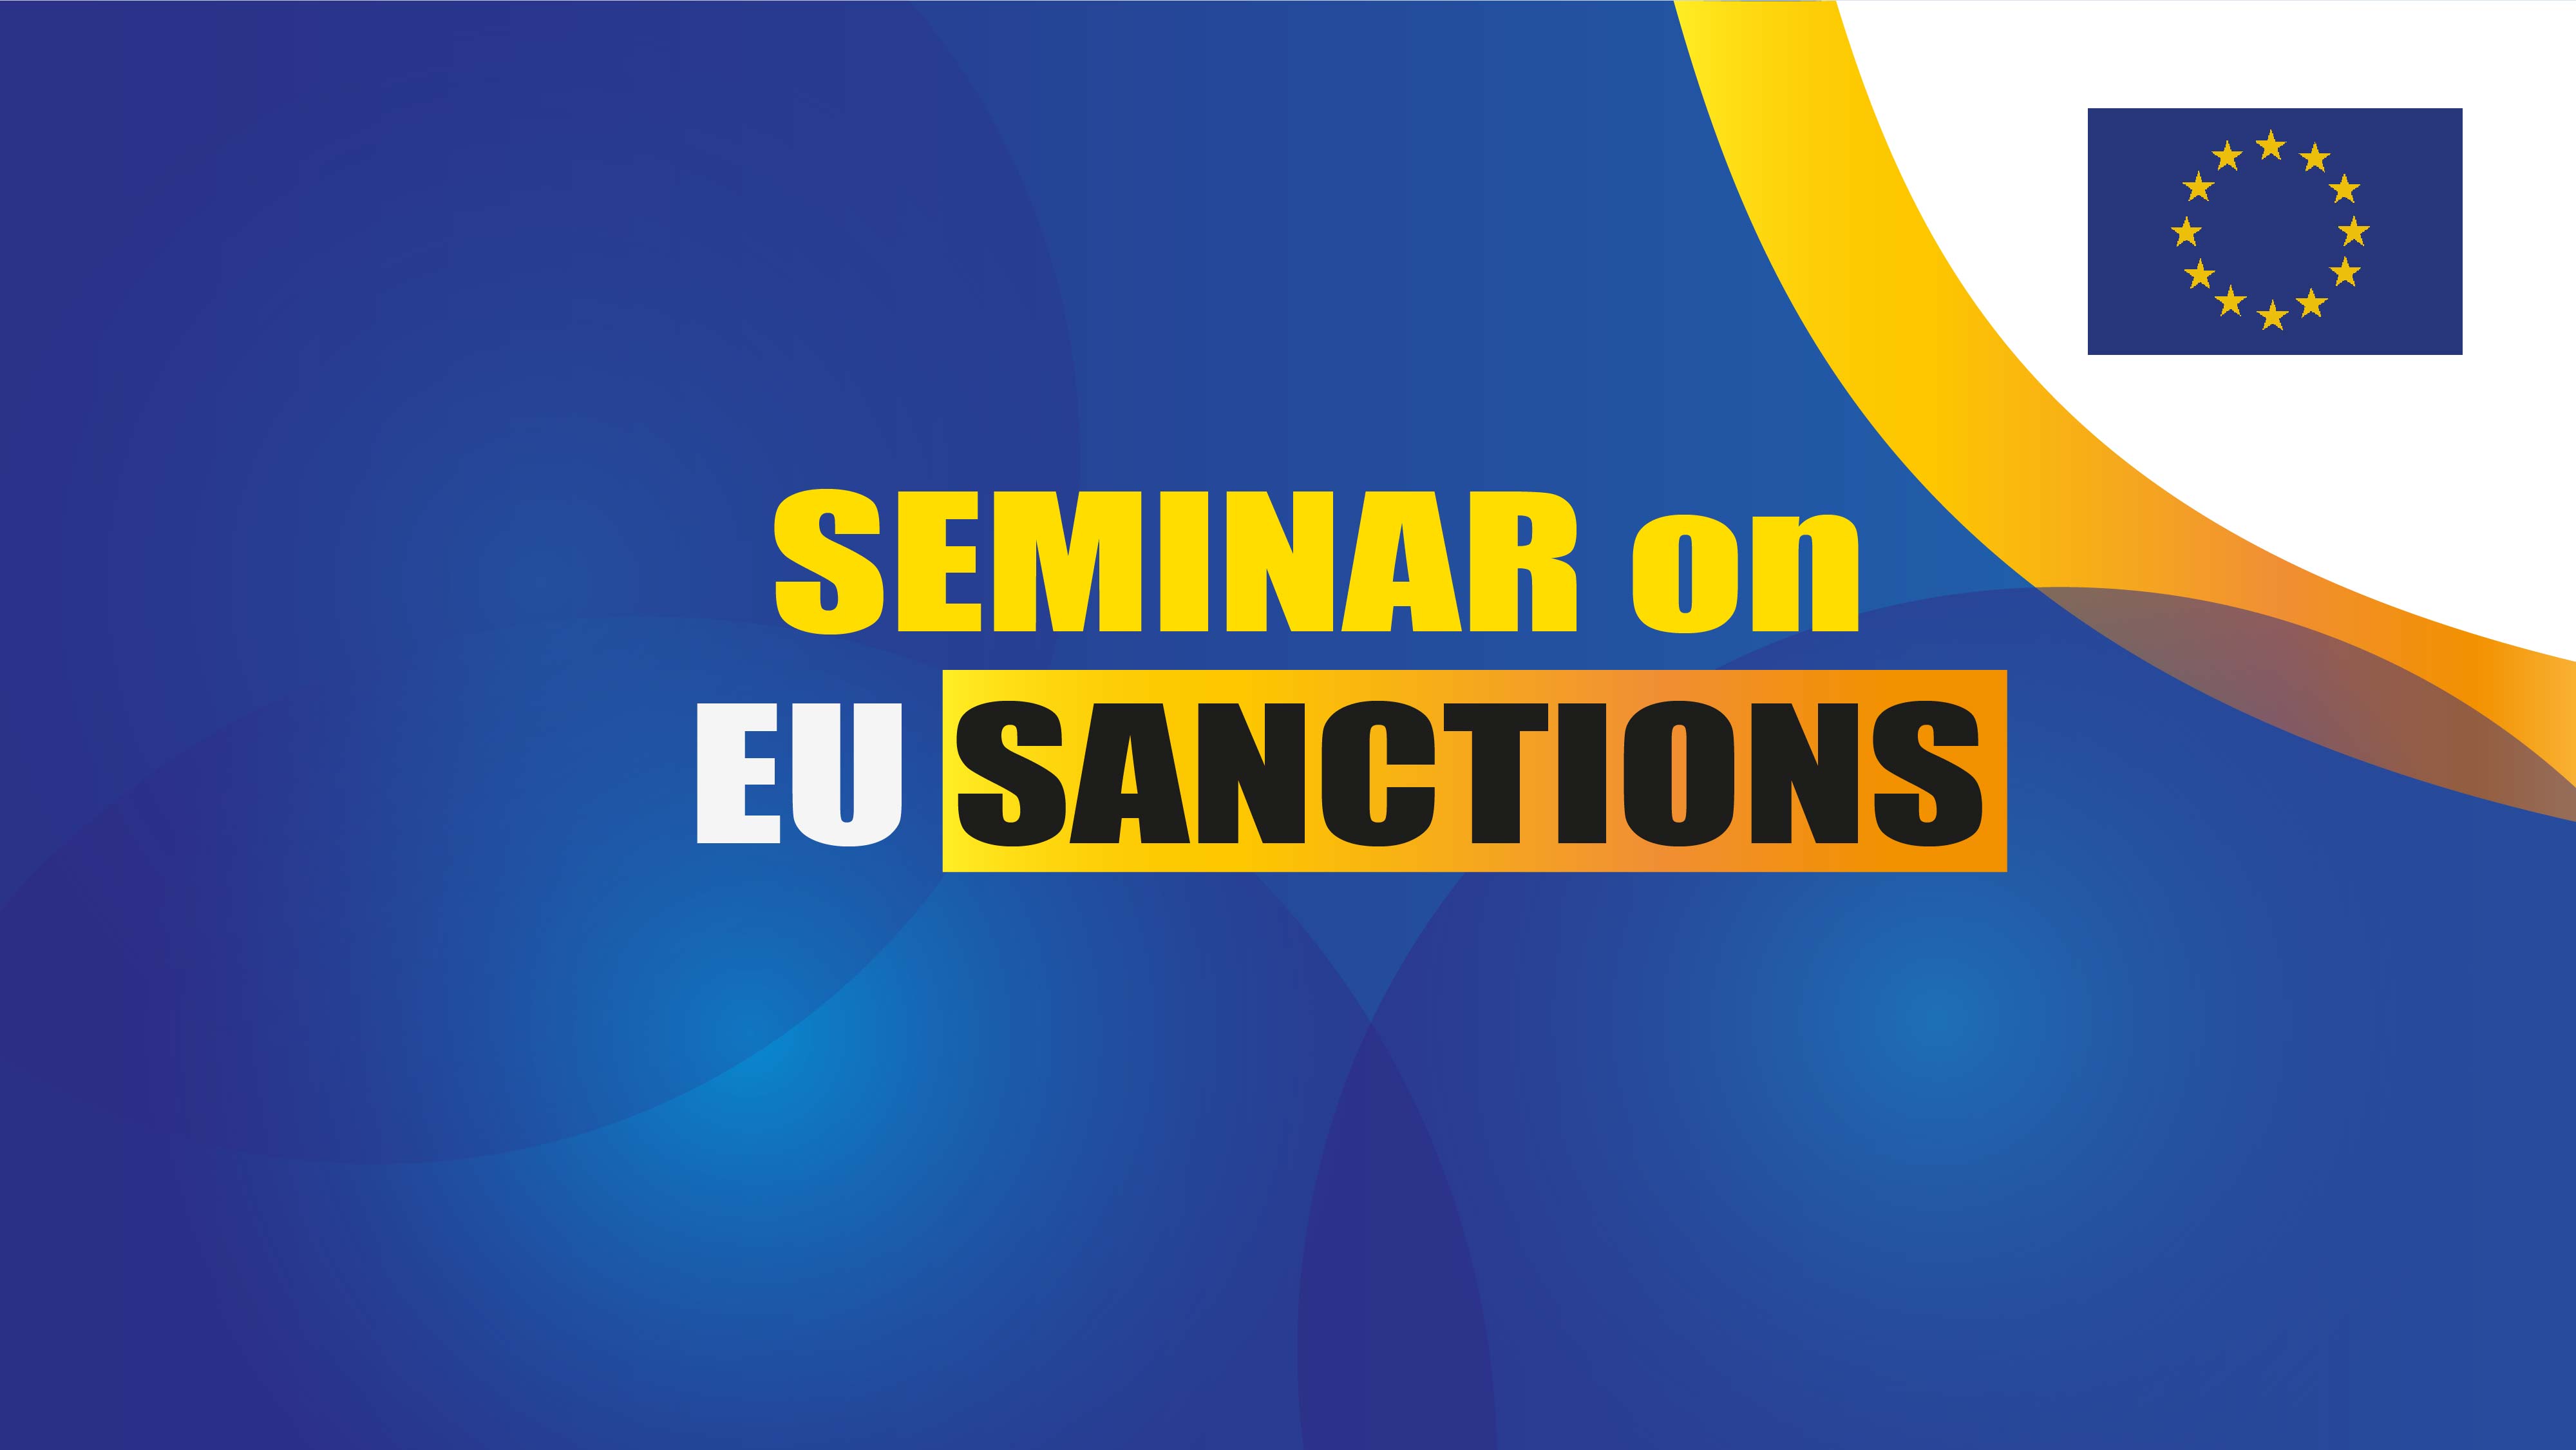 EU Sanctions Training Workshop 13 - 14 July, Istanbul